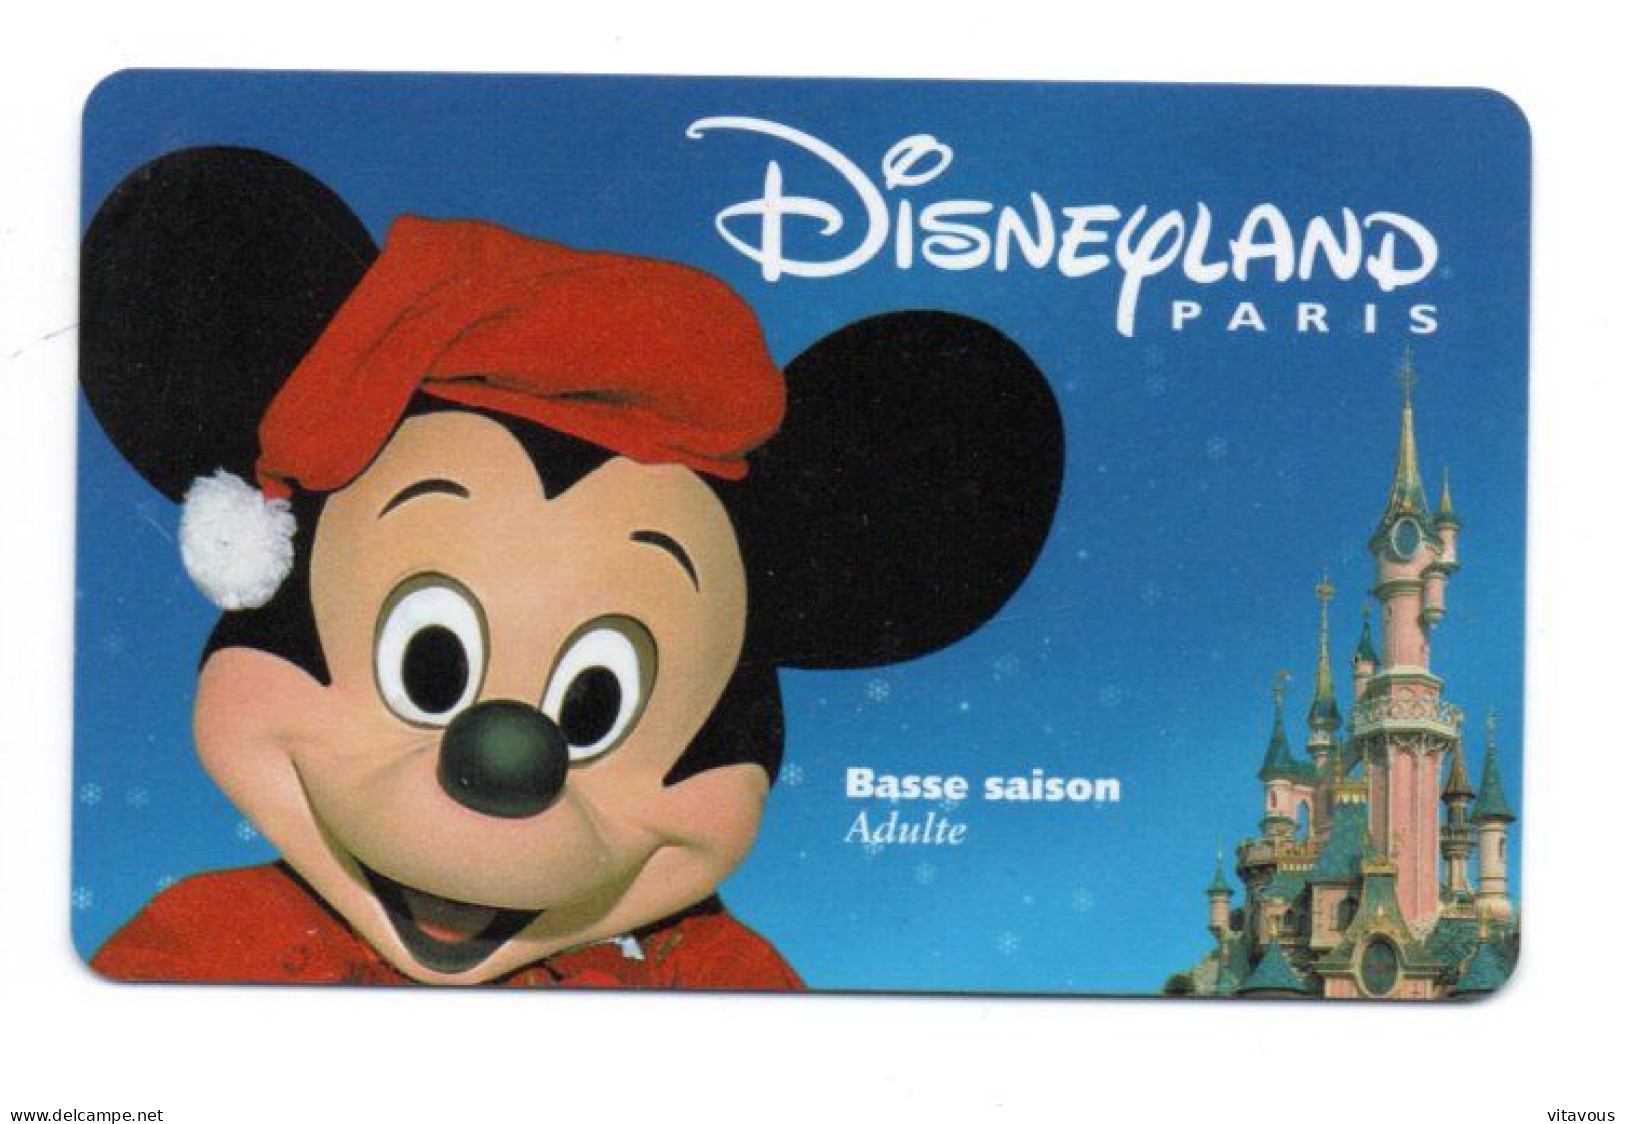 Passeport Disney Disneyland  PARIS France Card  (F 119) - Pasaportes Disney